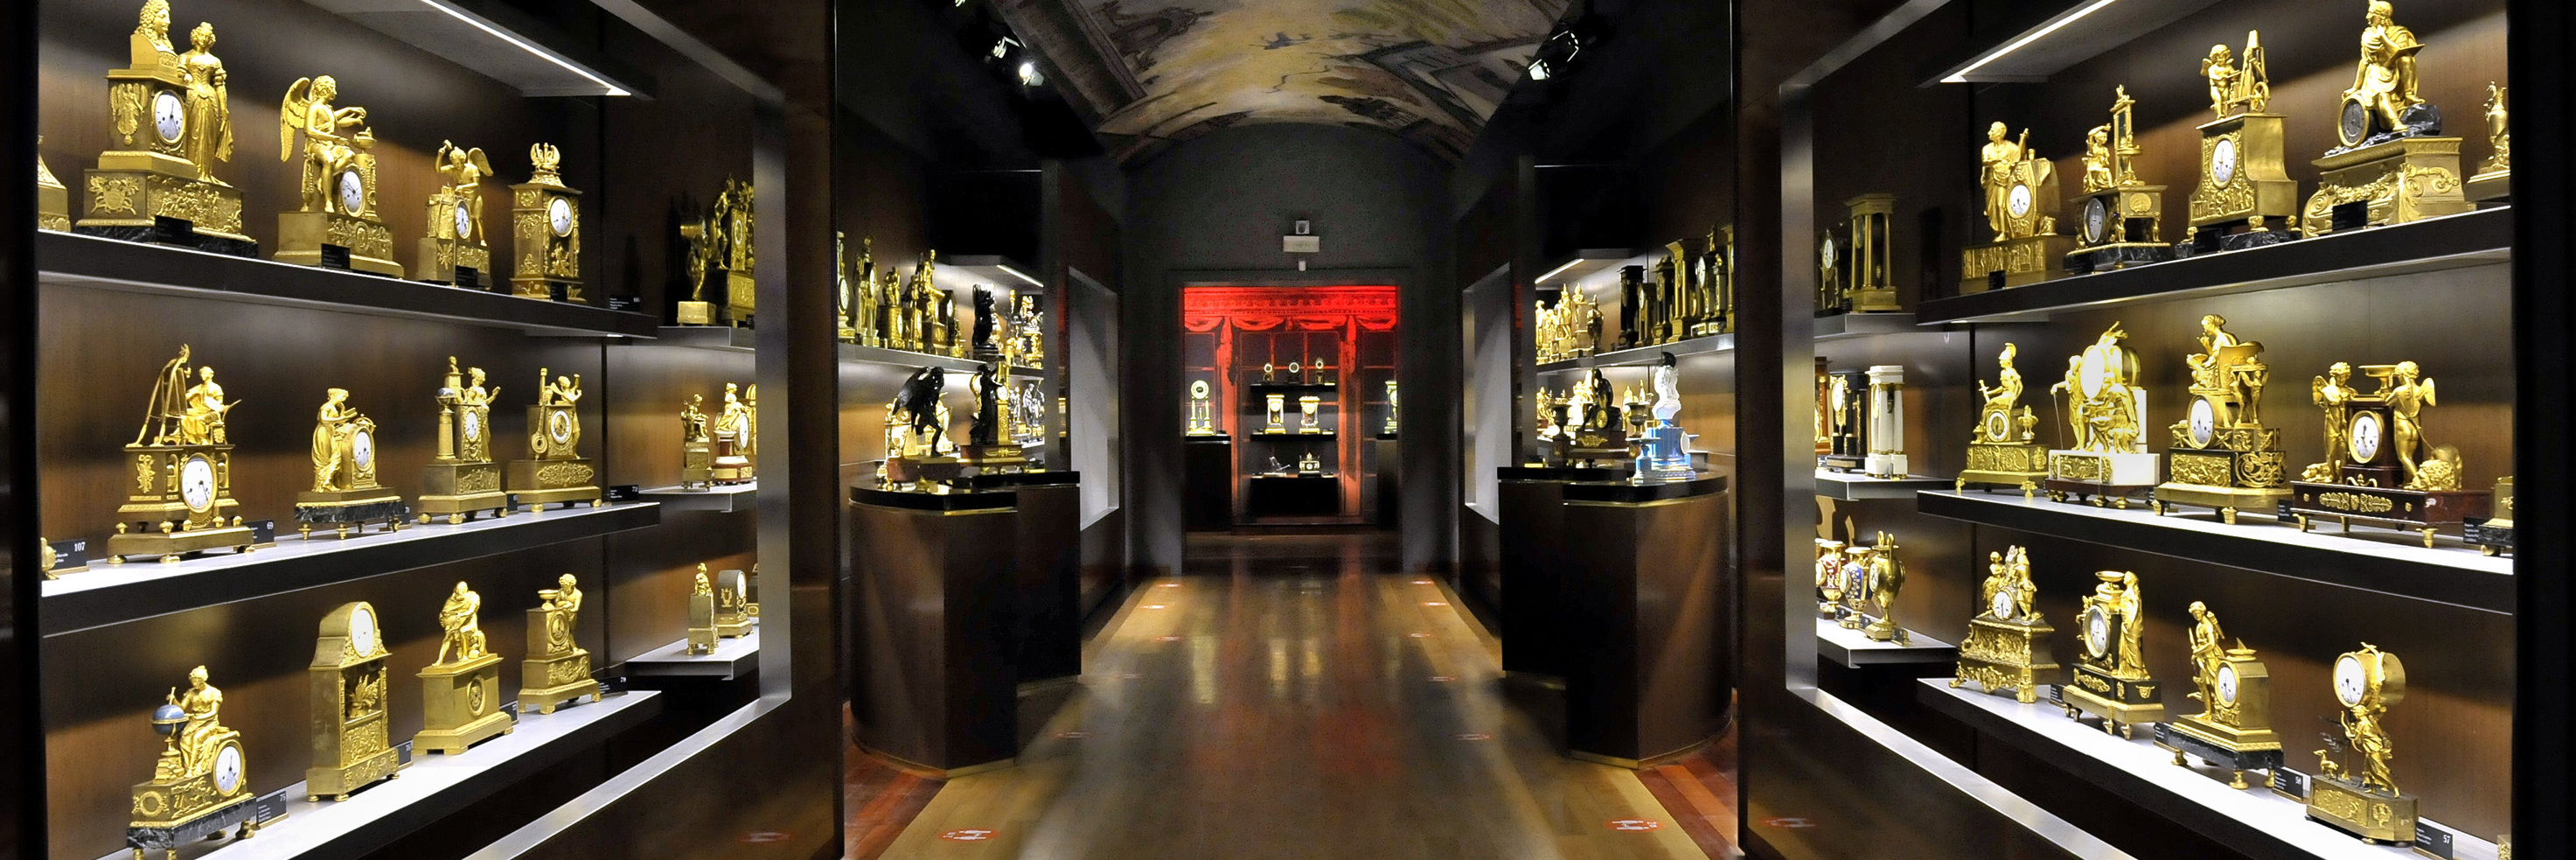 Museo Relojes